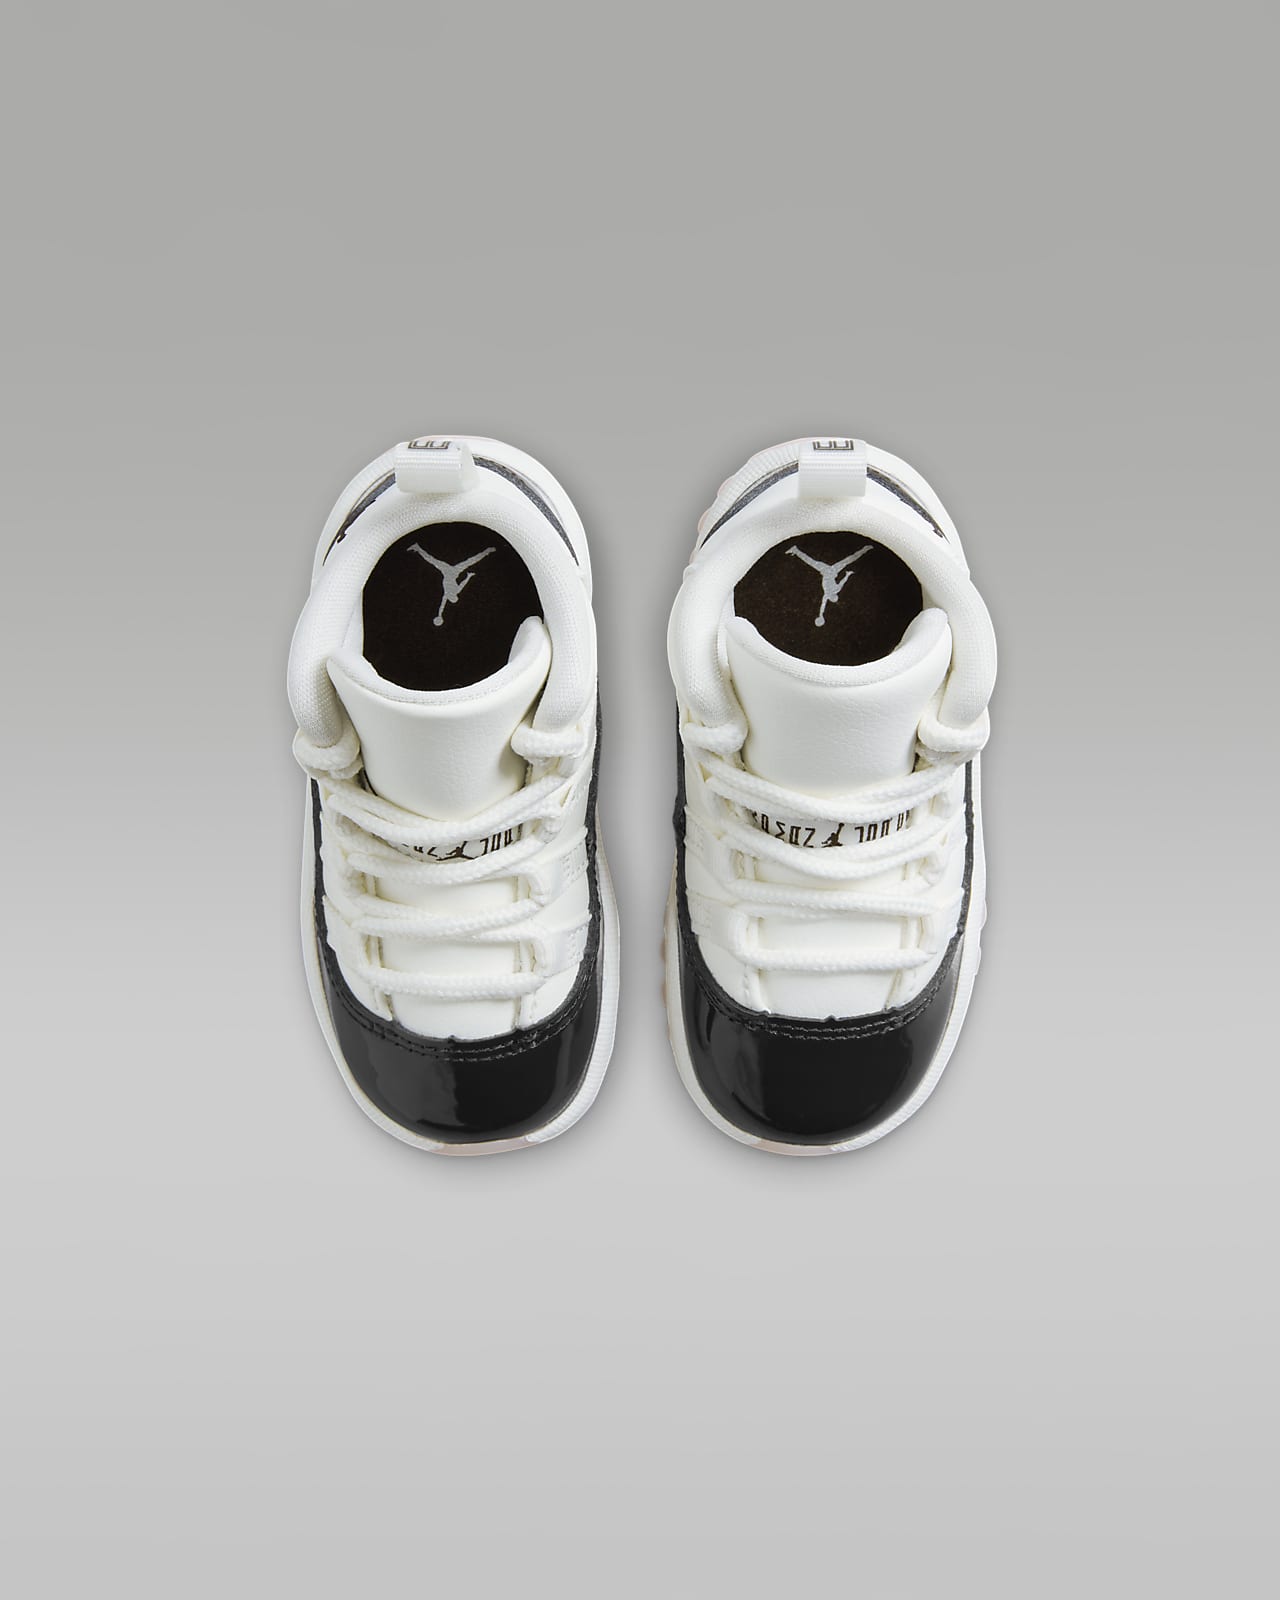 Louis Vuitton Jordan 11, Louis Vuitton Black White Air Jordan 11